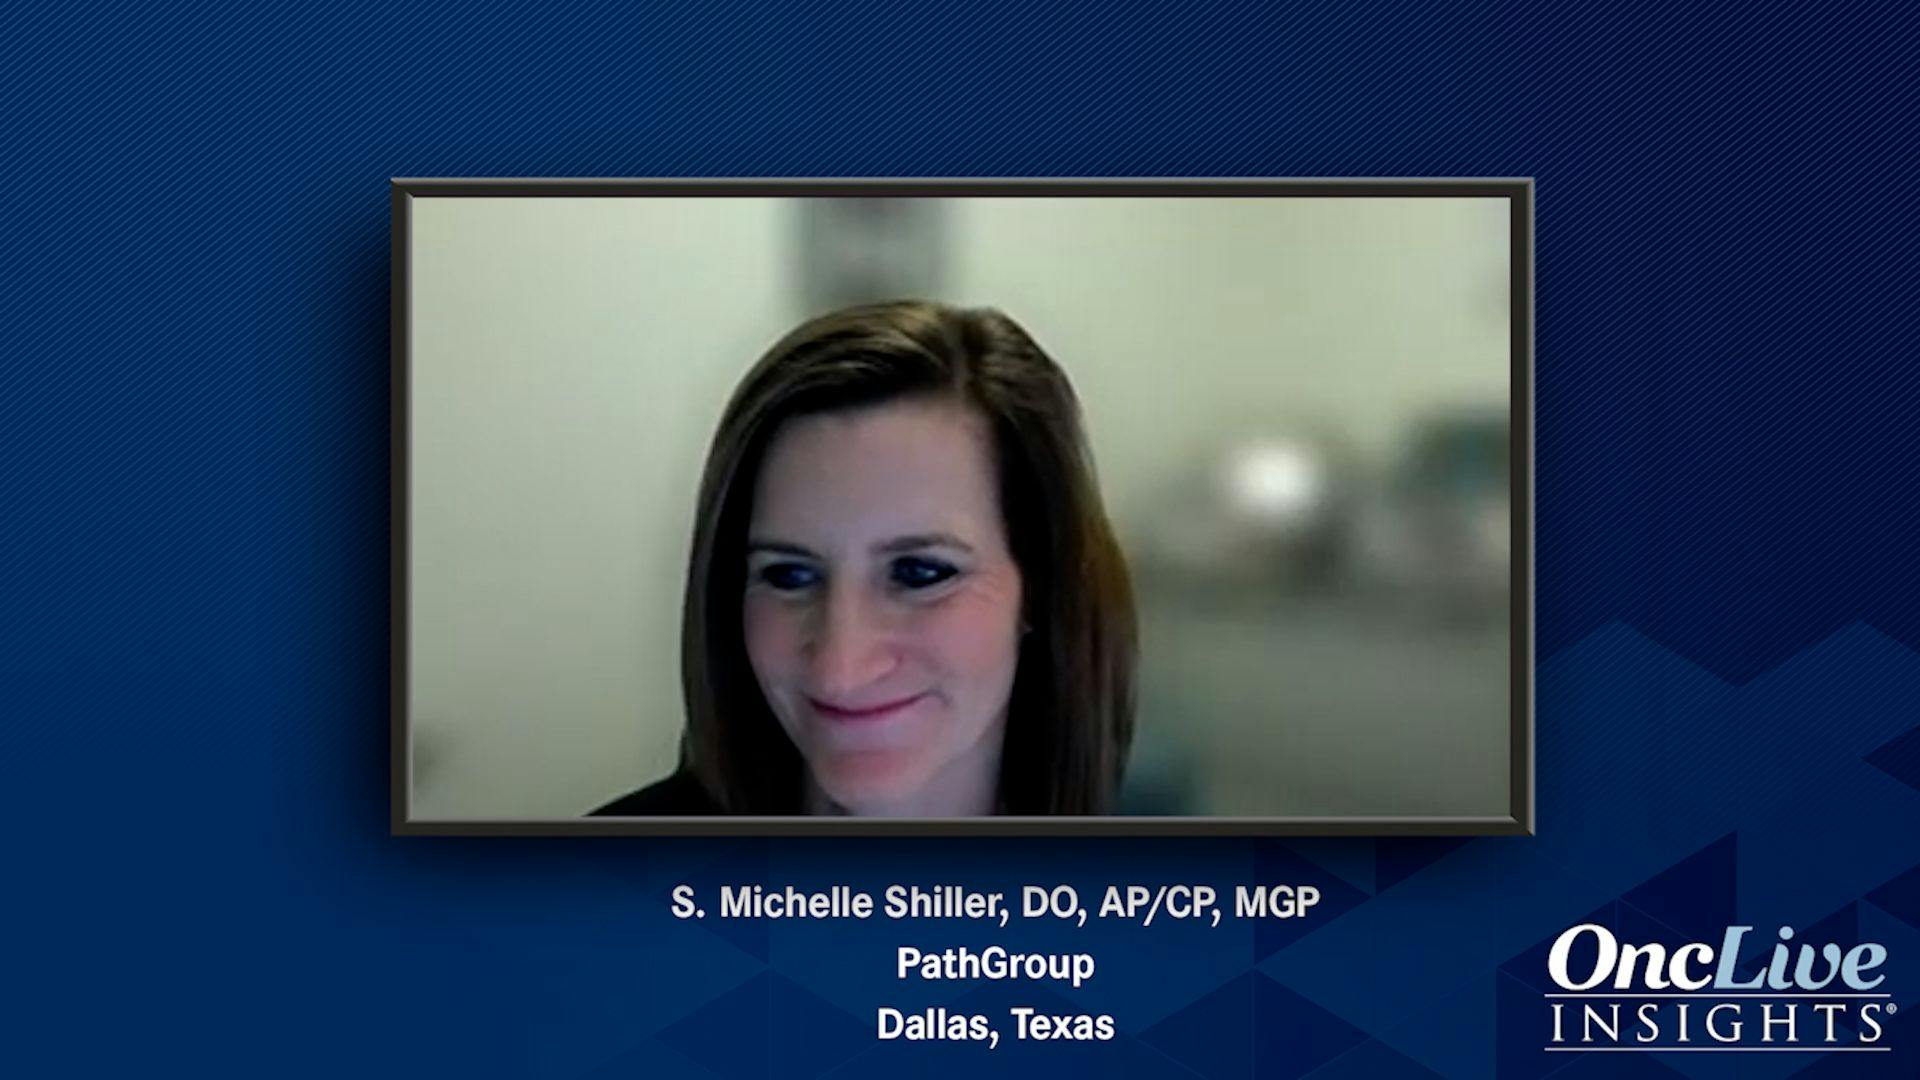 S. Michelle Shiller, DO, AP/CP, MGP, a molecular pathologist